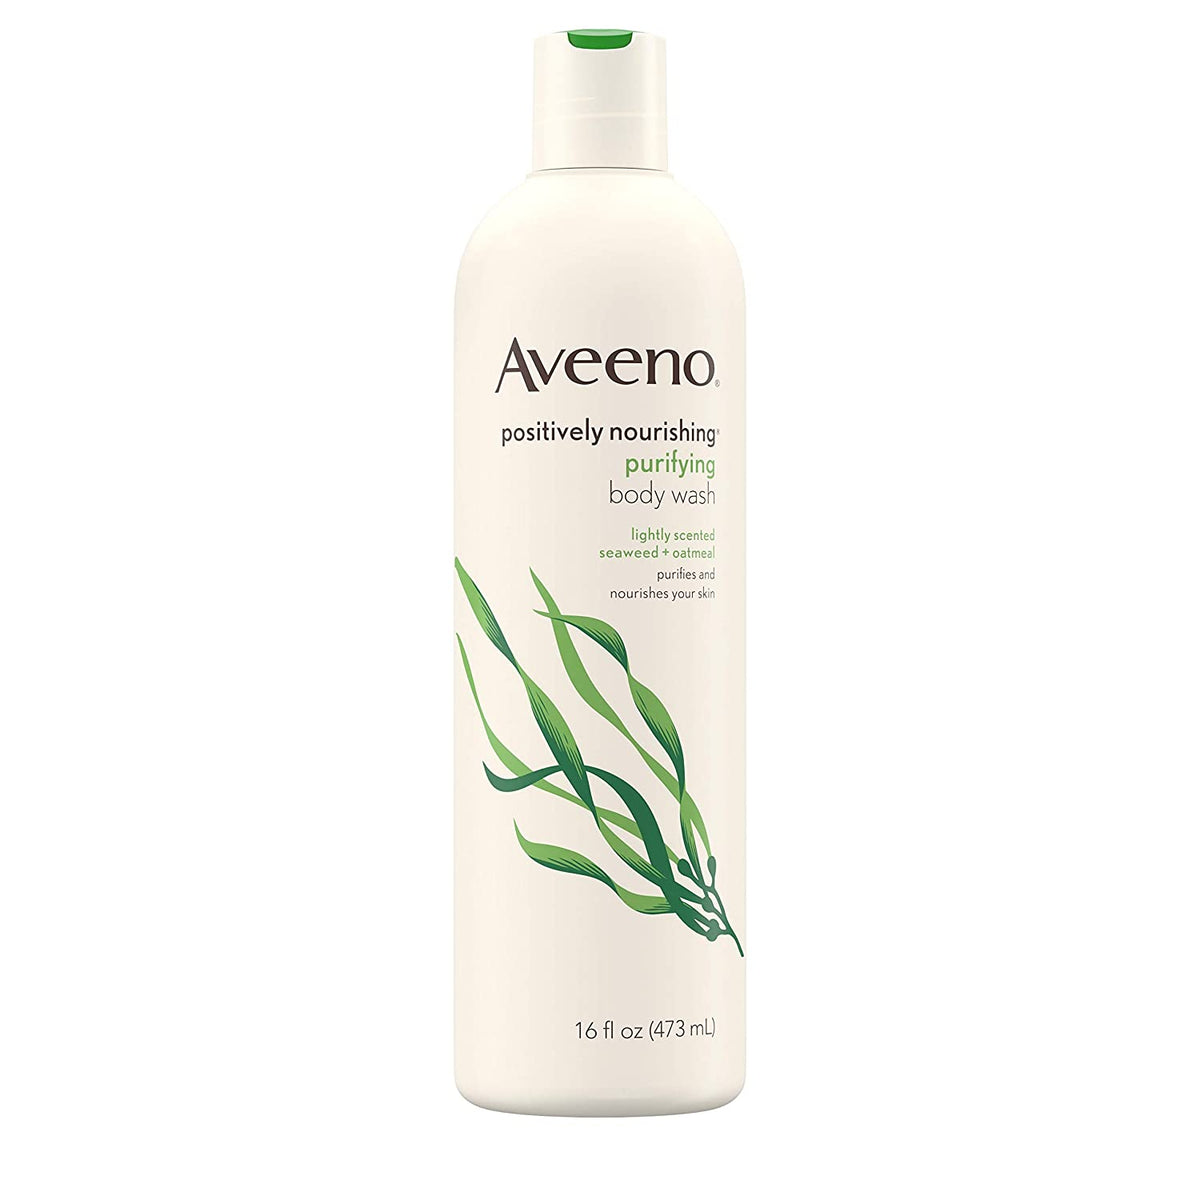 Aveeno Positively Nourishing Purifying Body Wash with Seaweed & Soothing Oatmeal - 473mL